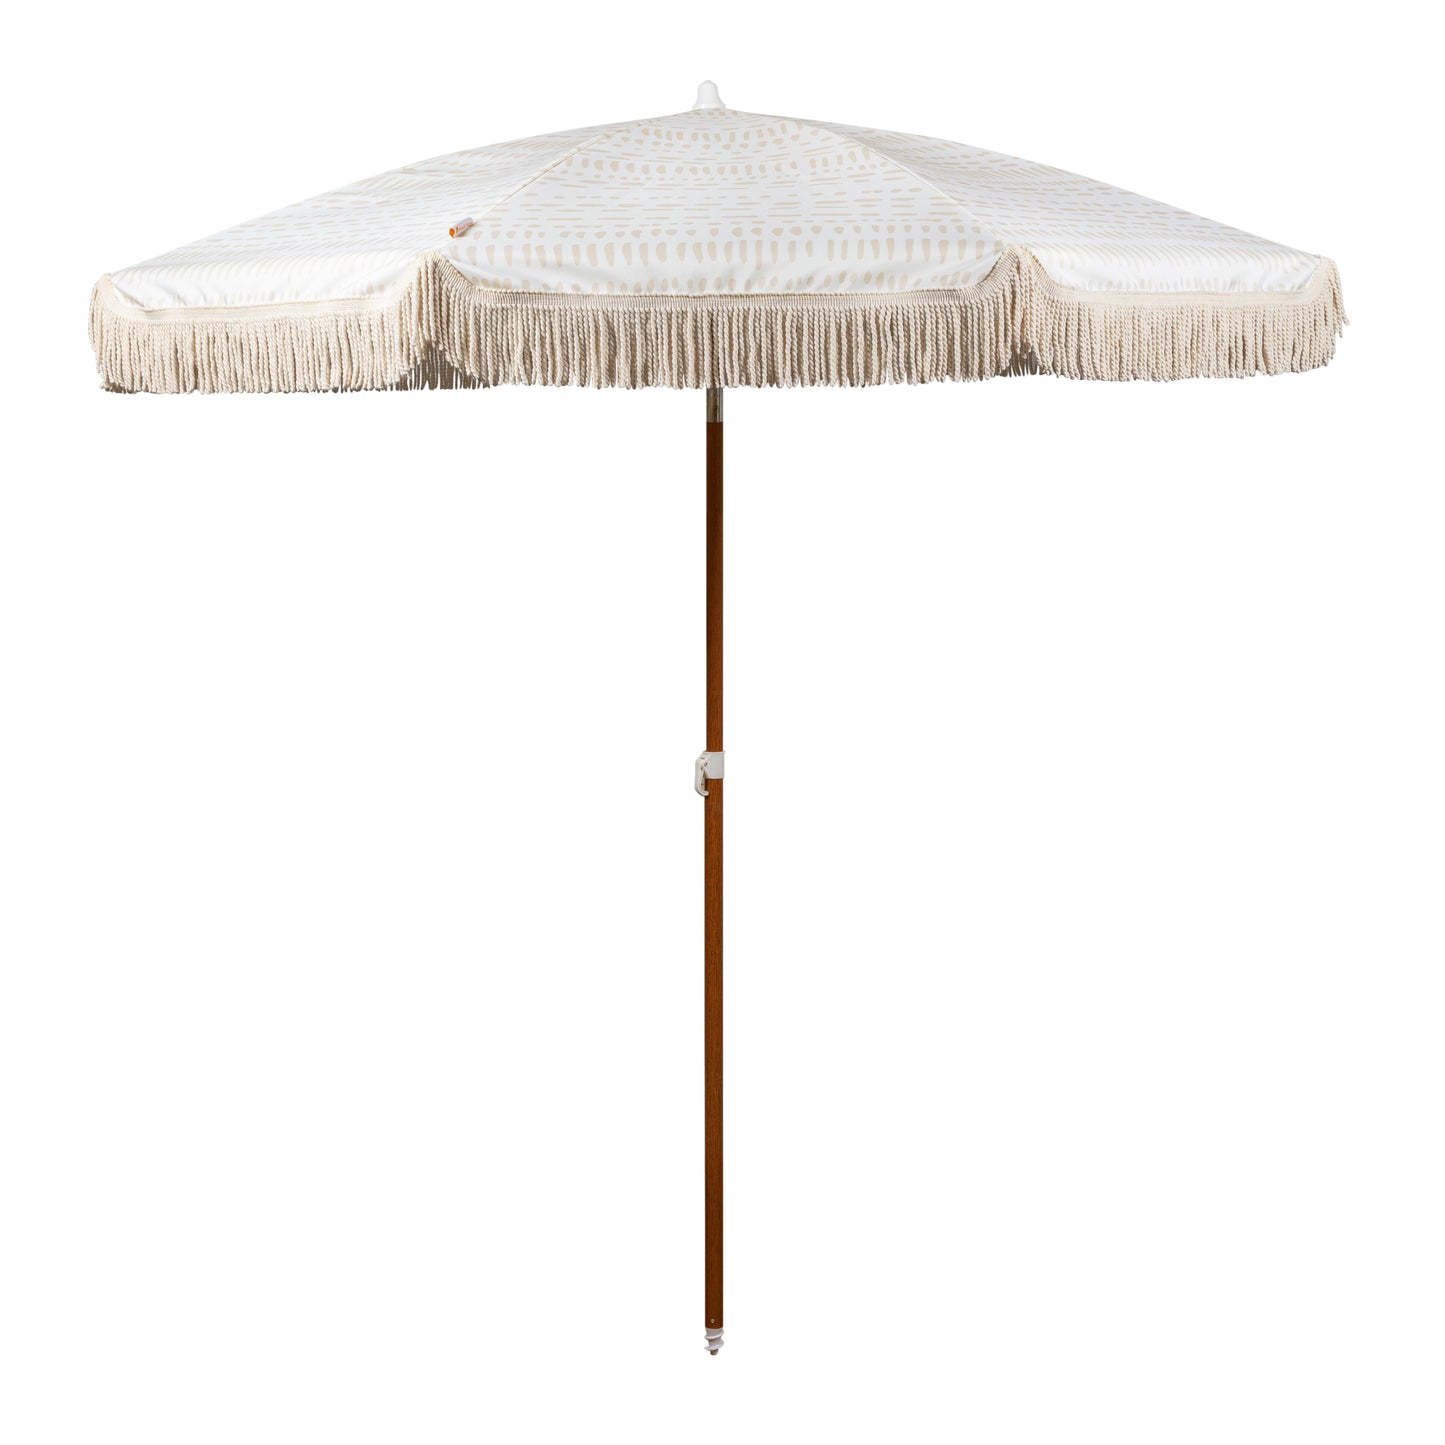 Load image into Gallery viewer, Summerland Beach Umbrella - Laguna
